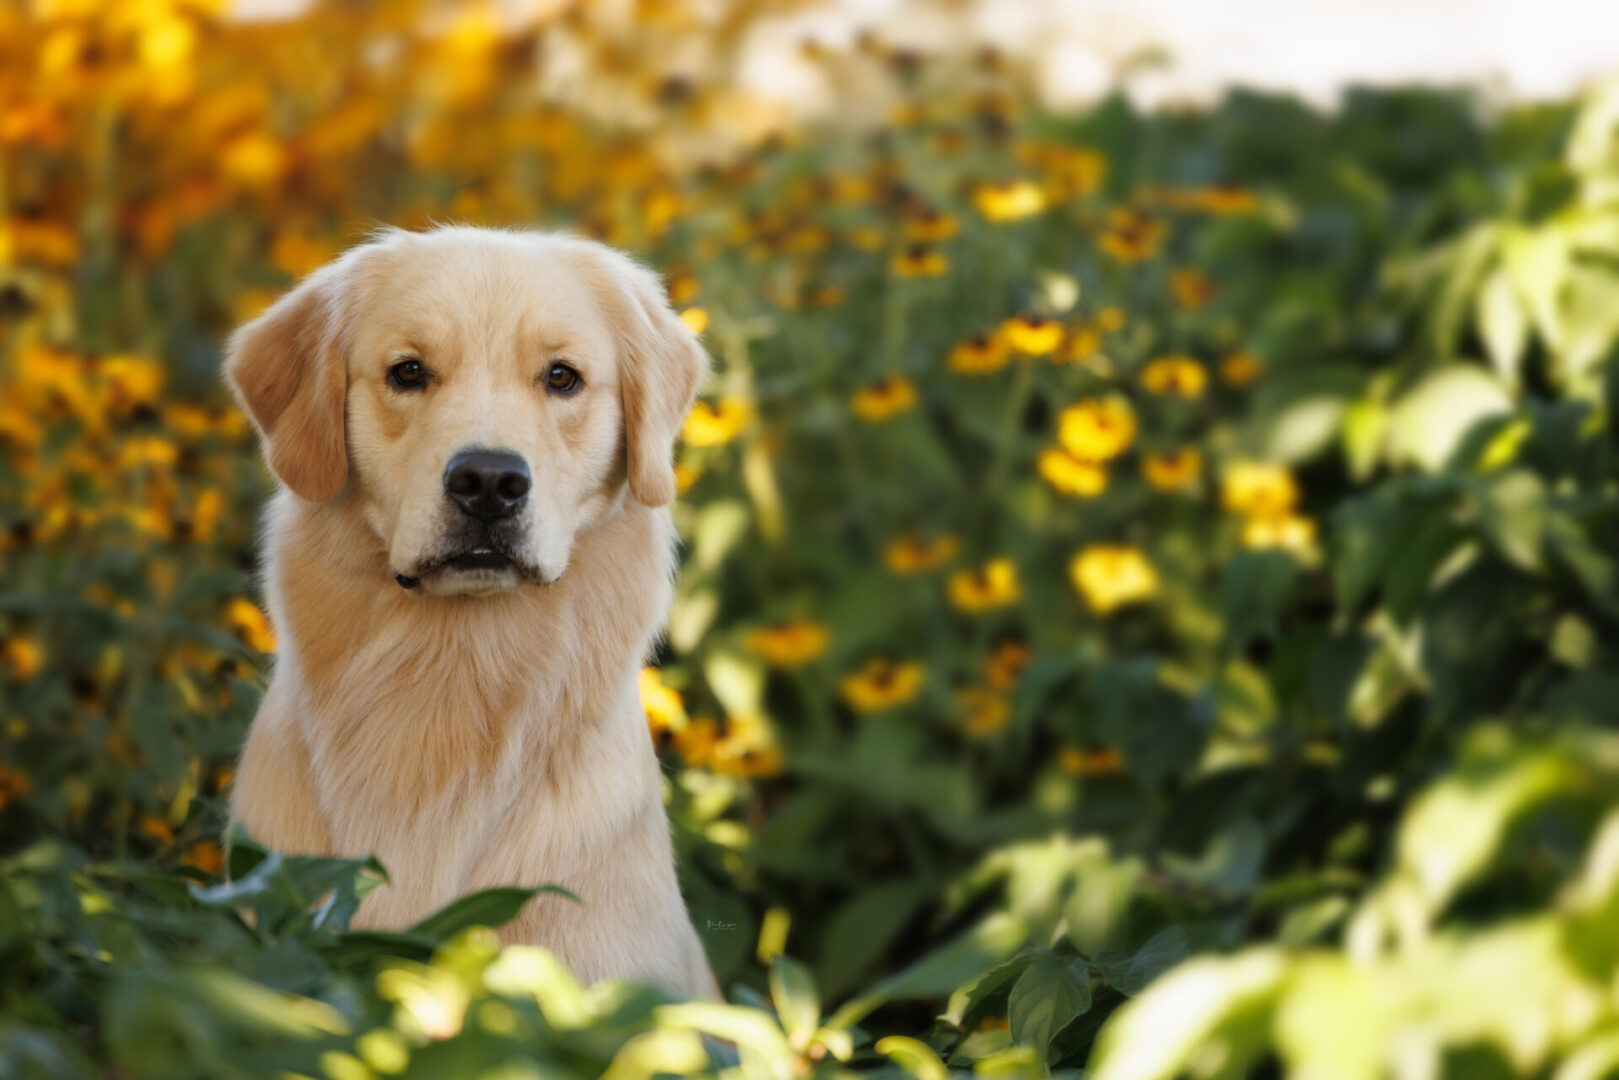 A golden retriever standing in a field of flowers.